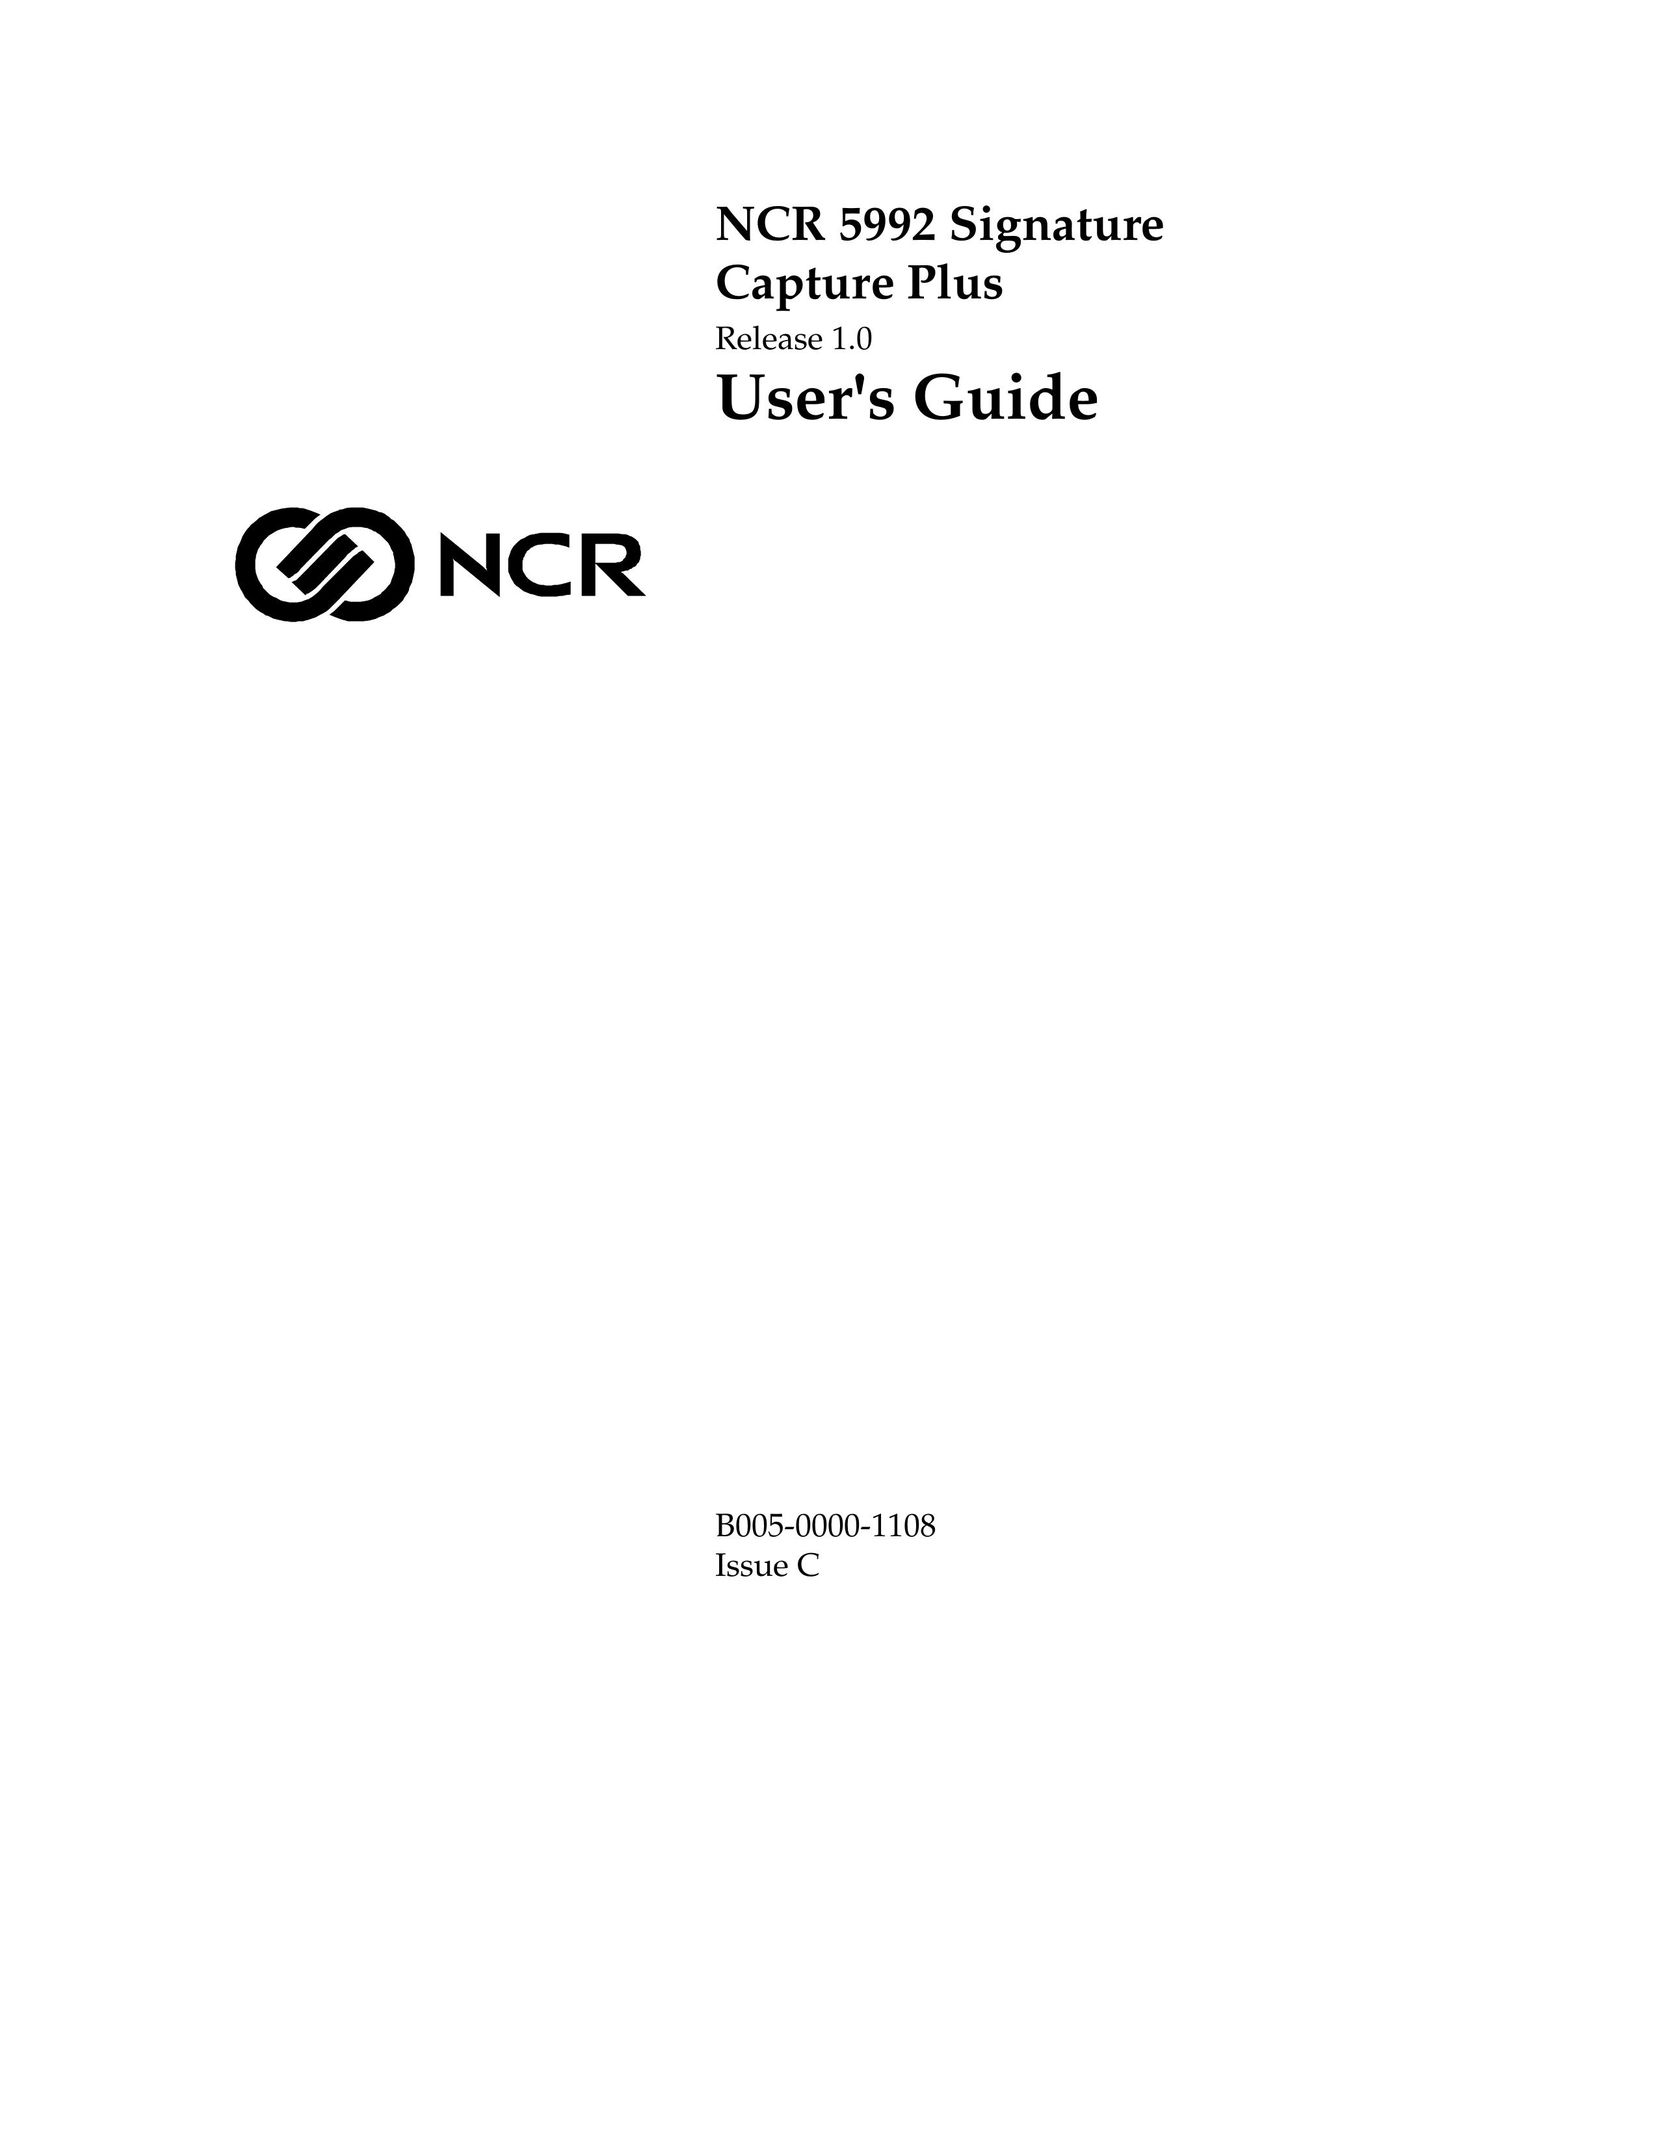 NCR NCR 5992 Credit Card Machine User Manual